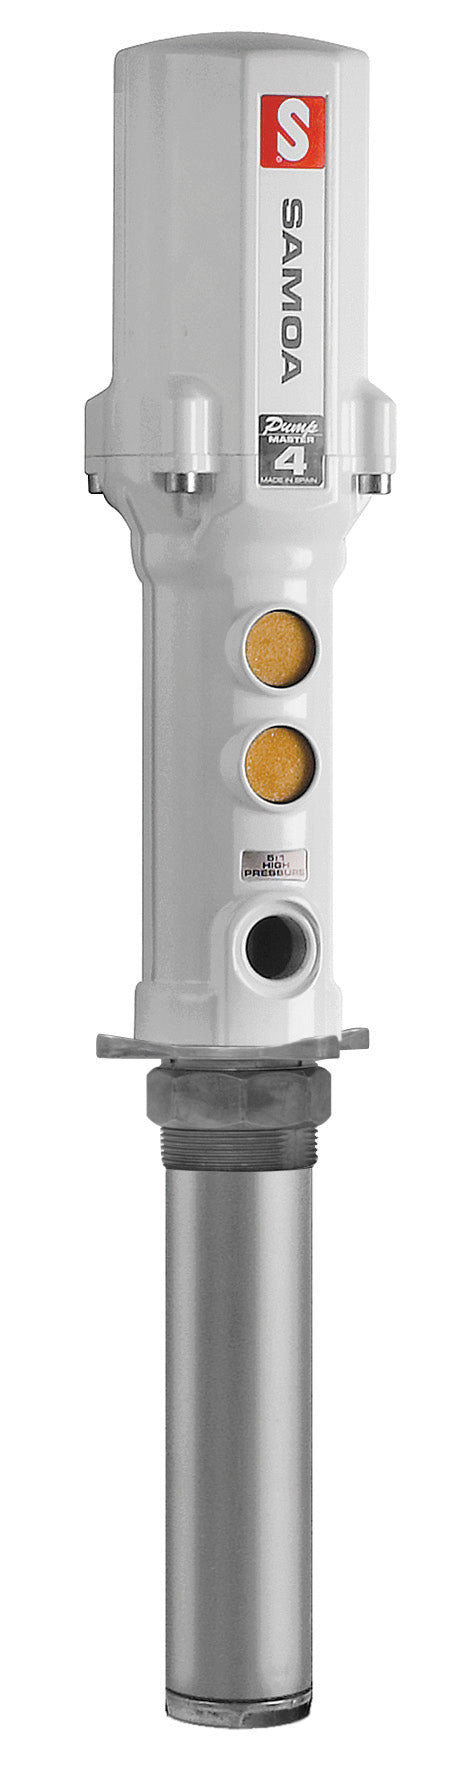 SAMOA® Pumpmaster 4, 3:1 Ratio High Volume Oil Pump - 205 Litre Drum Bung Mounted (CPE341120)